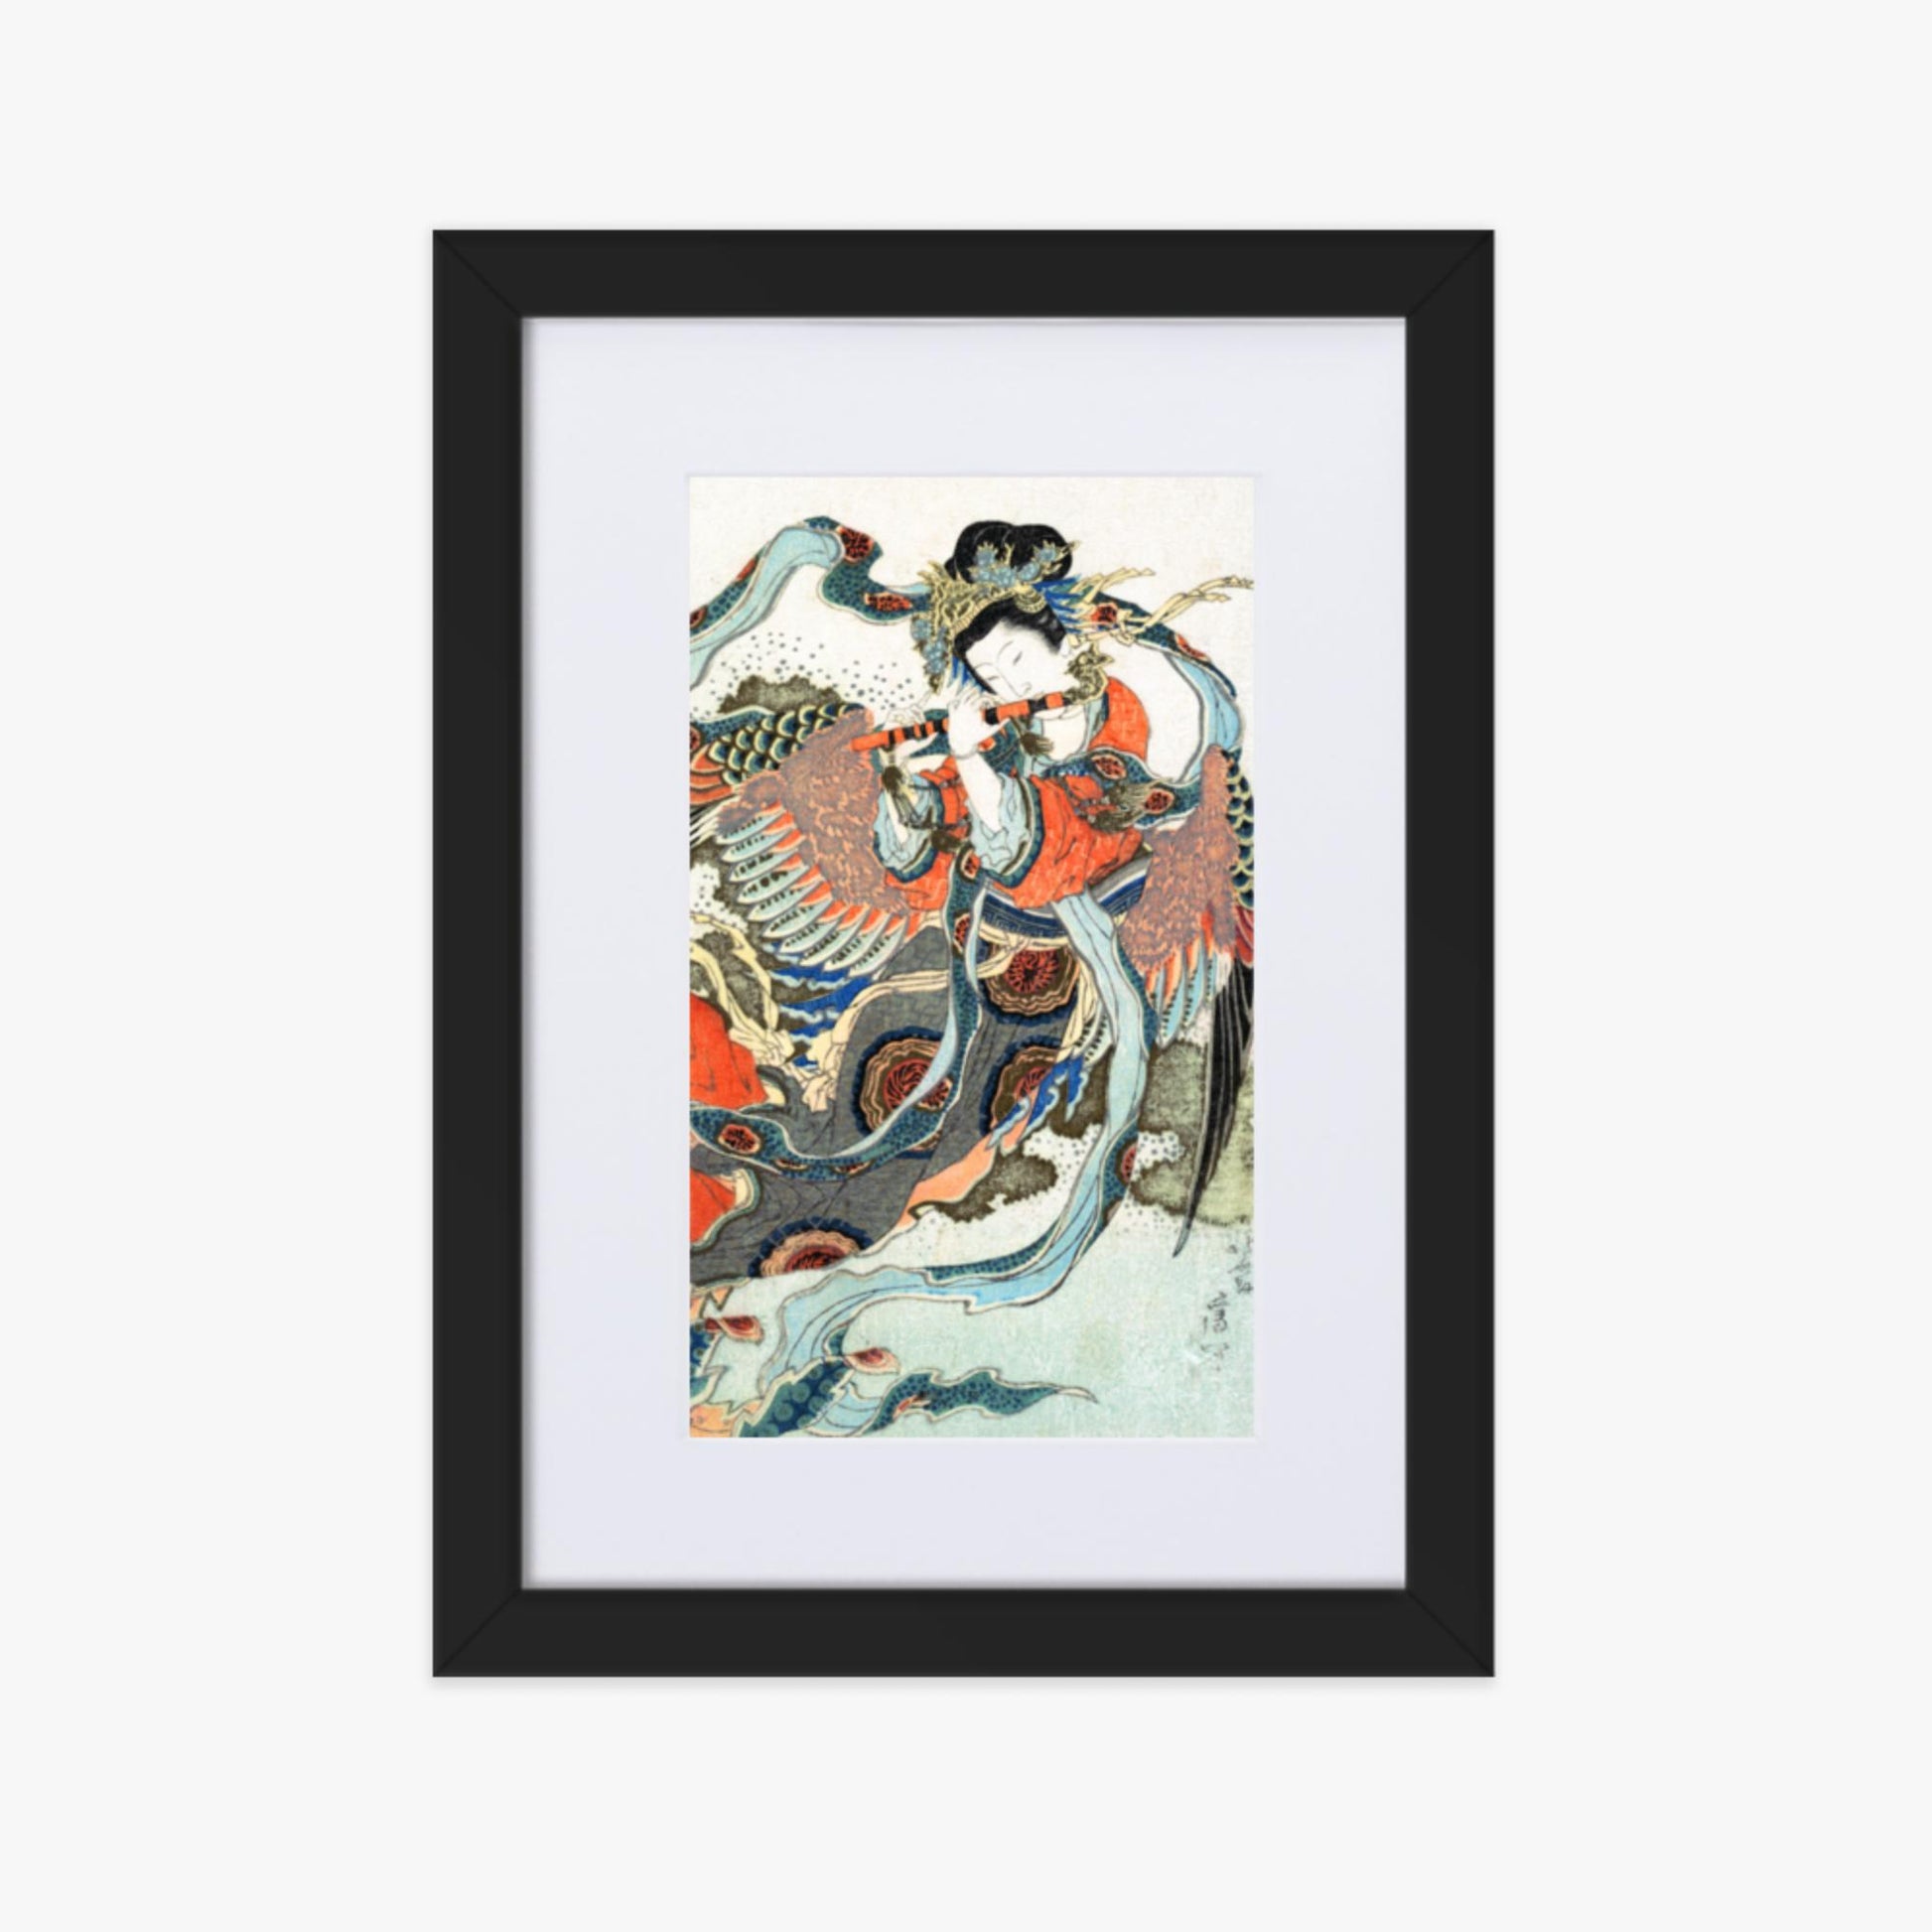 Katsushika Hokusai - Mystical Bird 21x30 cm Poster With Black Frame